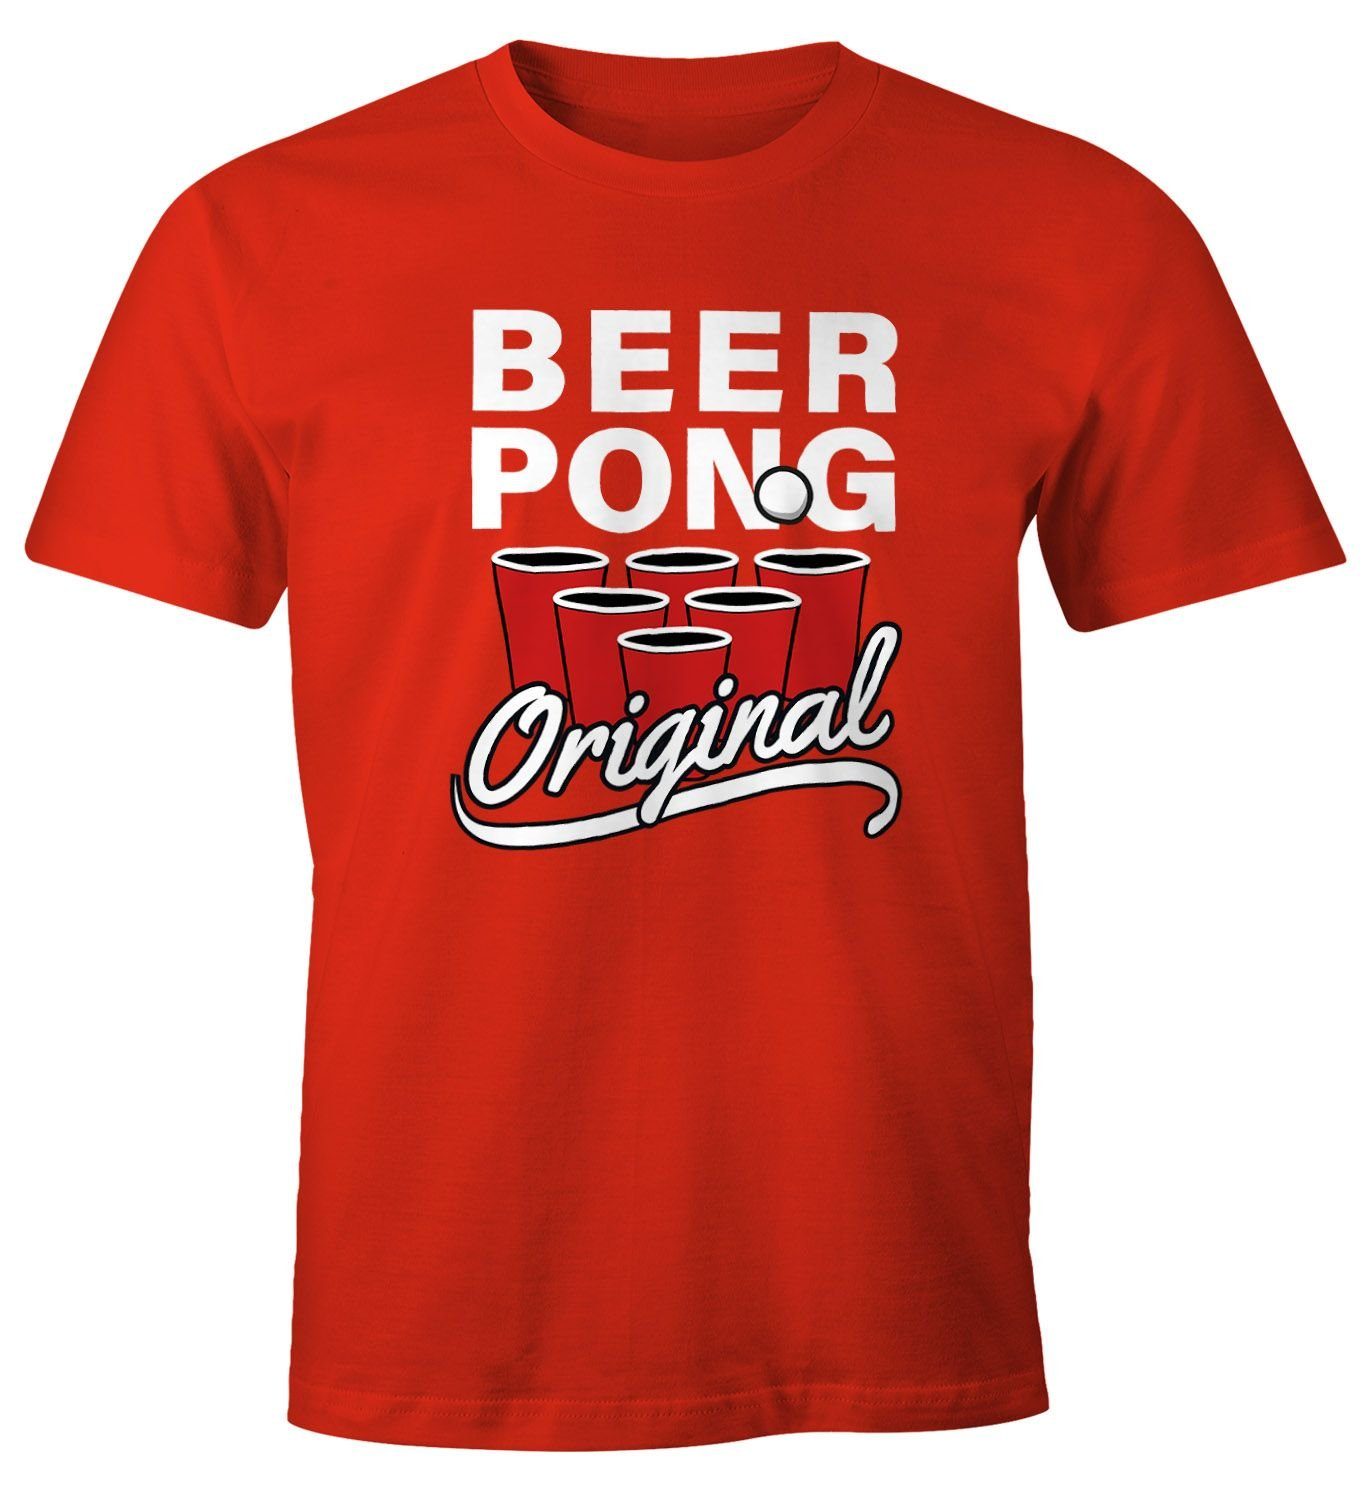 MoonWorks Print-Shirt Herren T-Shirt Beer Pong Original Bier Fun-Shirt Moonworks® mit Print rot